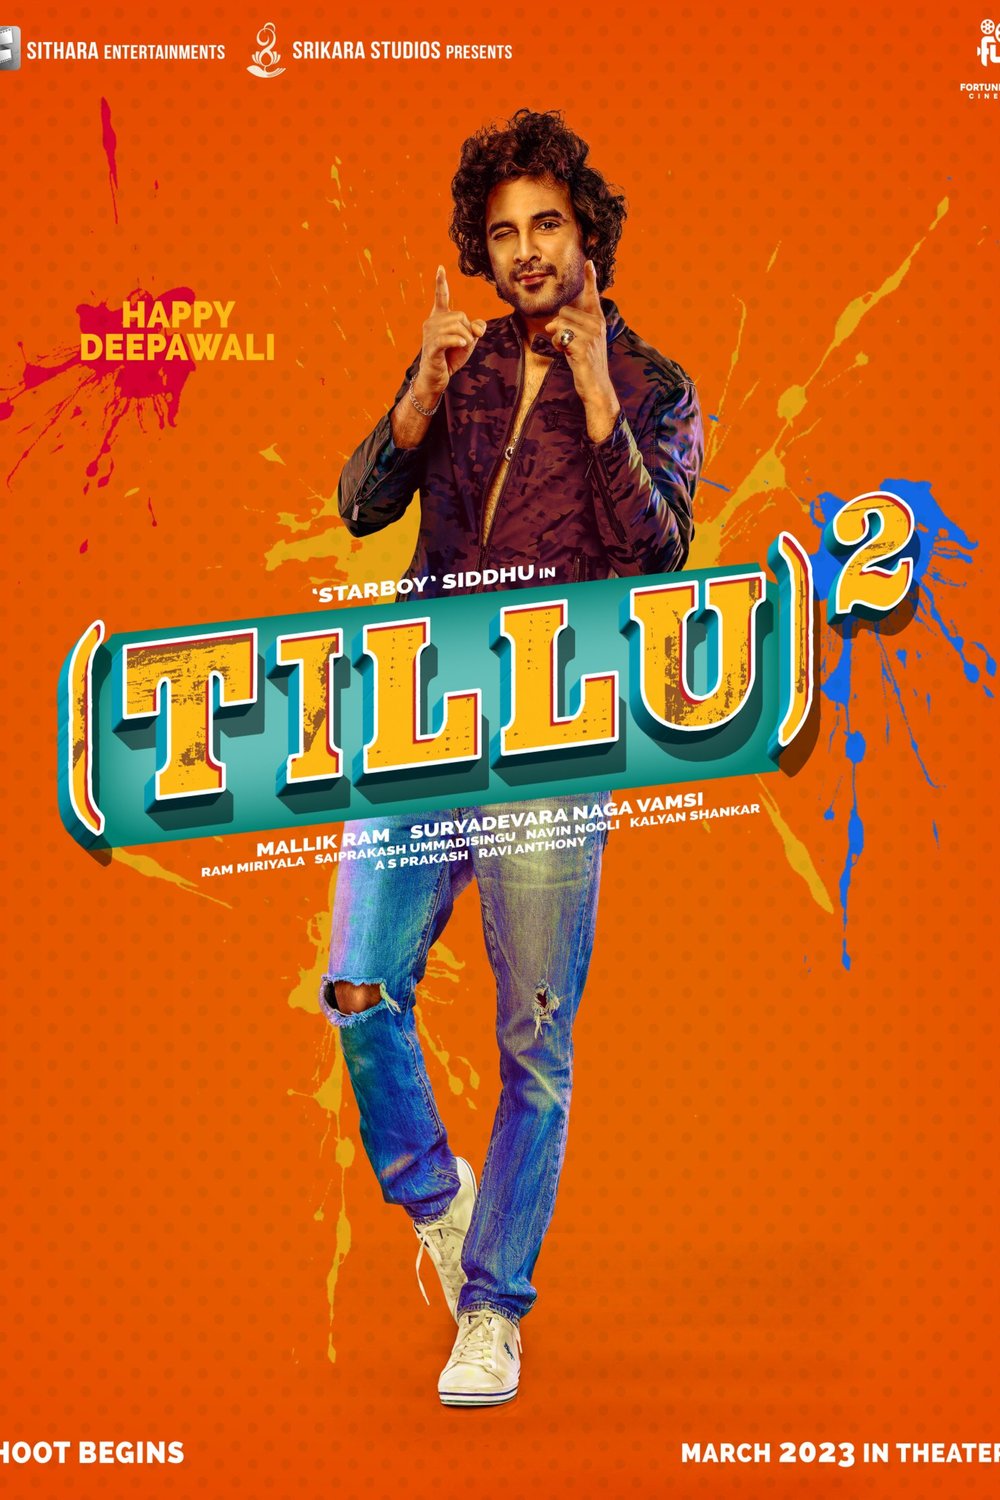 Telugu poster of the movie Tillu Square